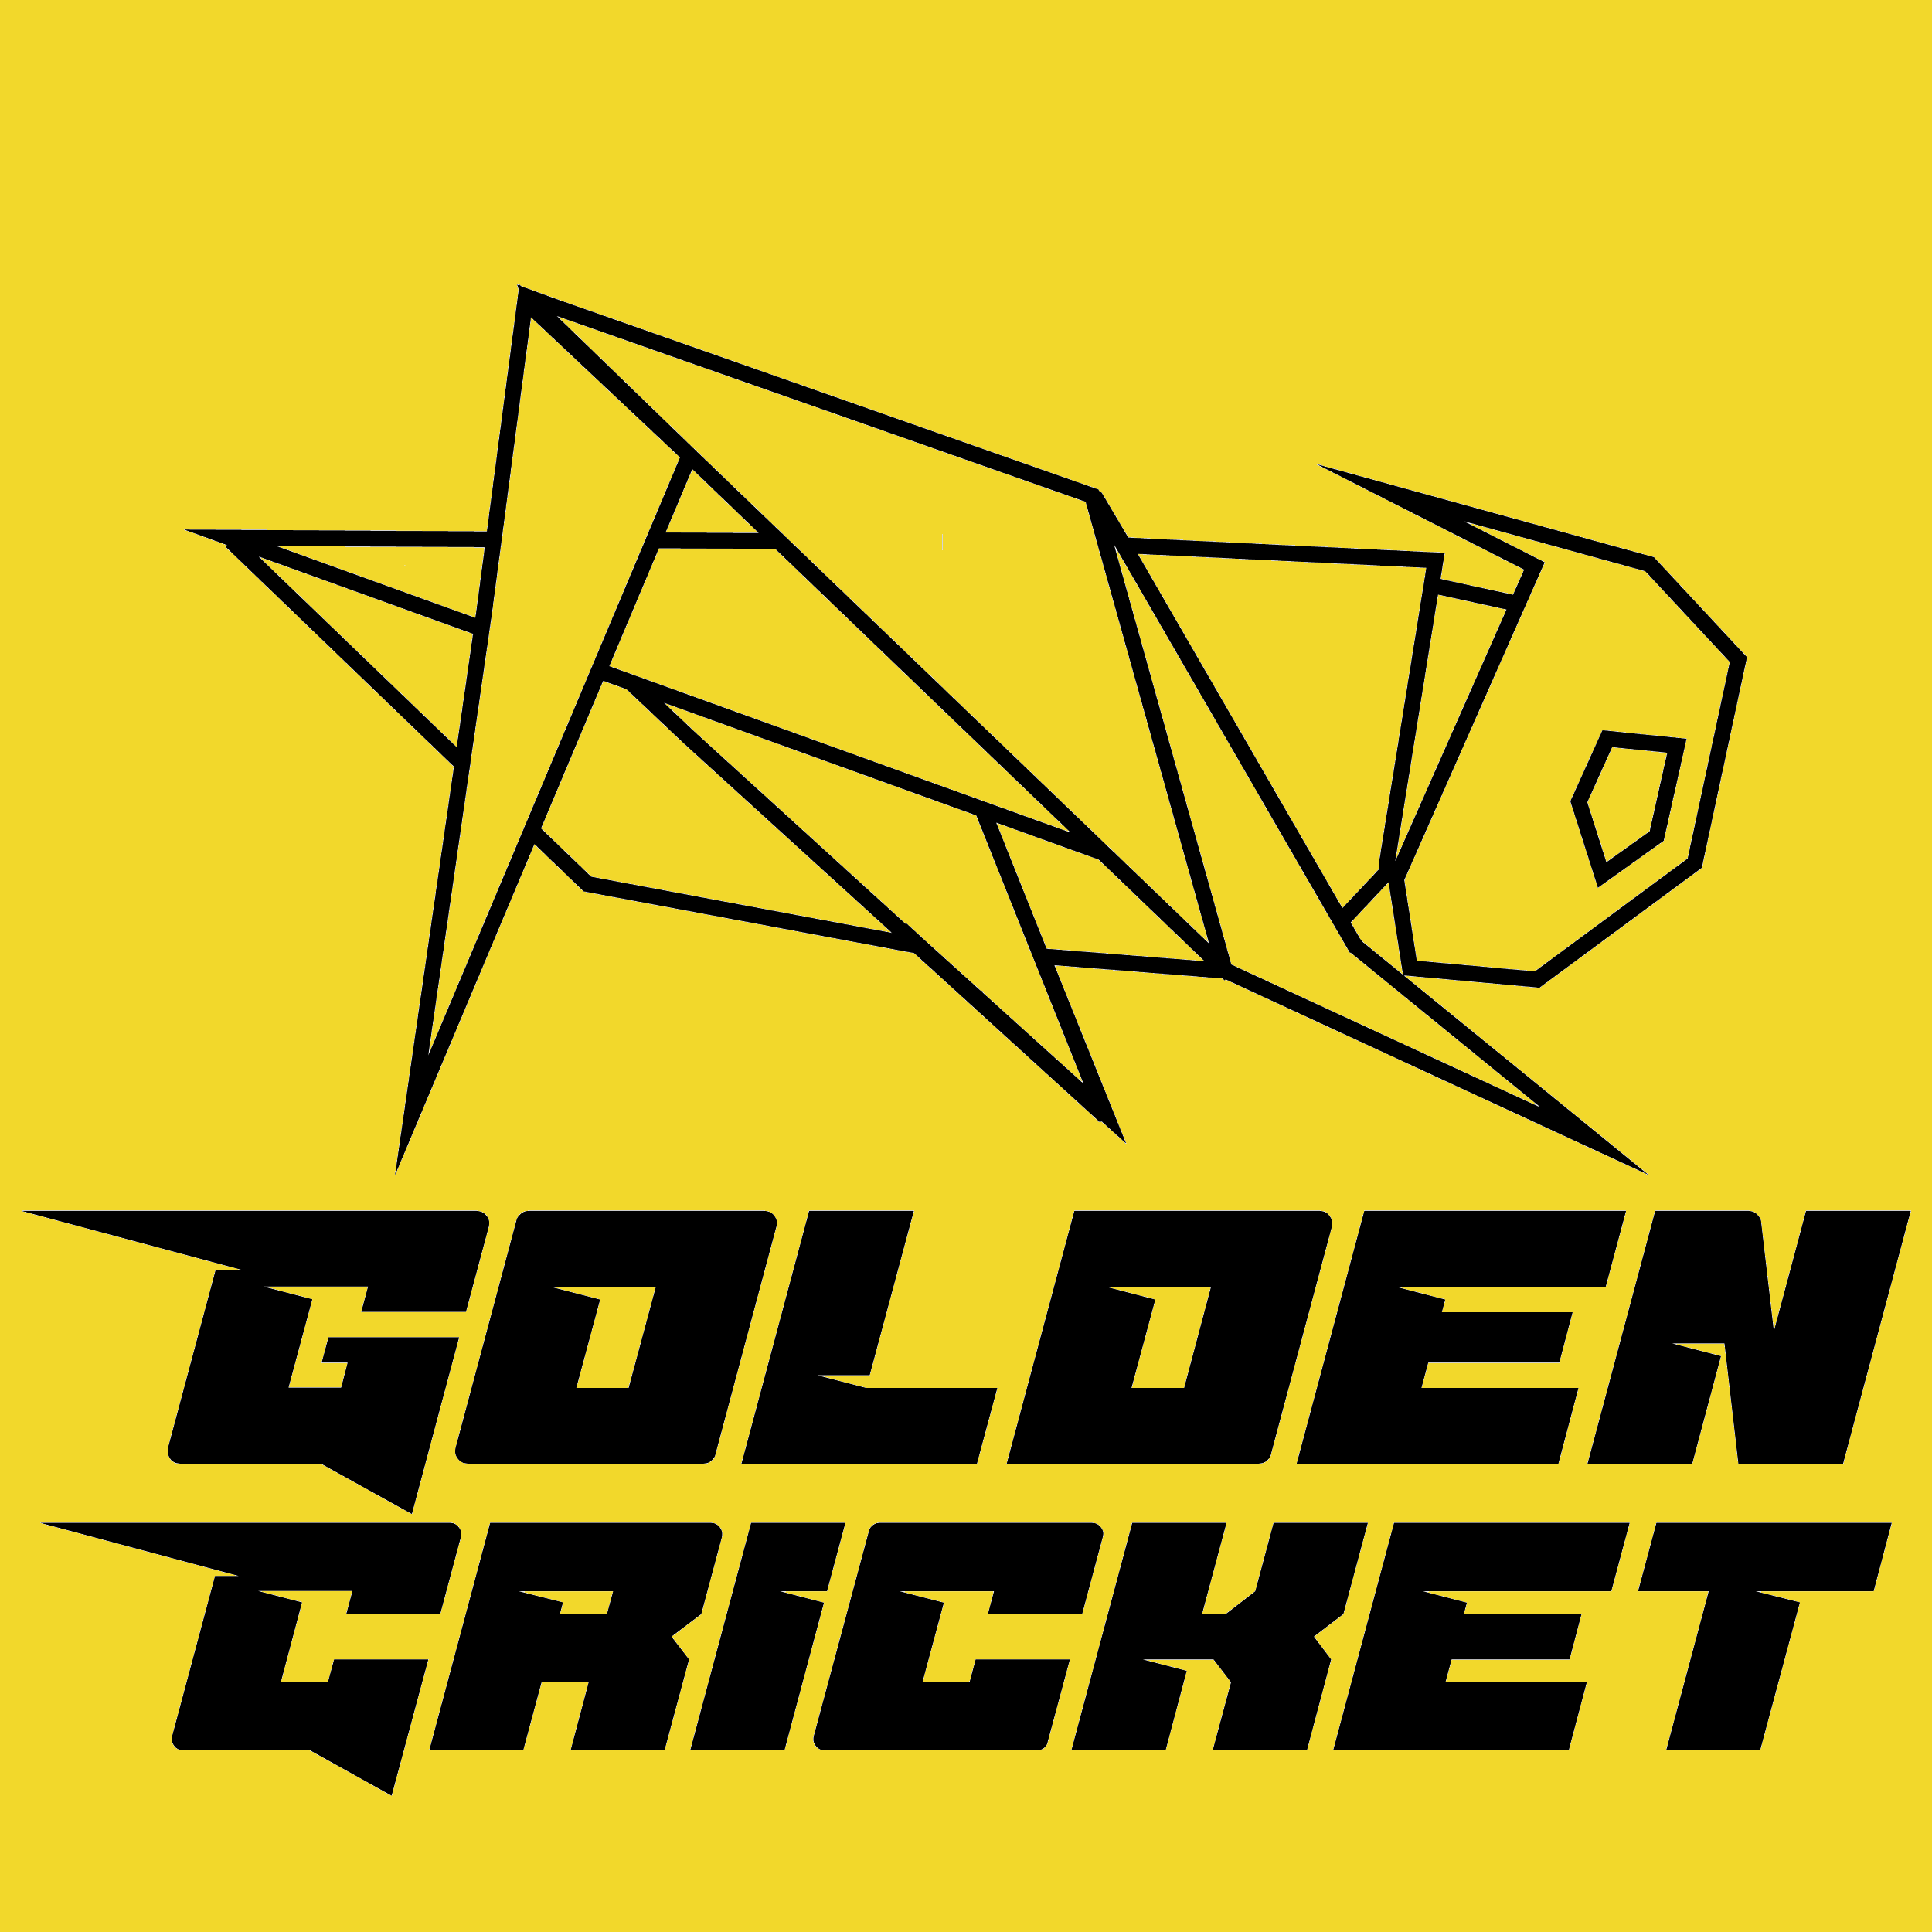 Golden Cricket